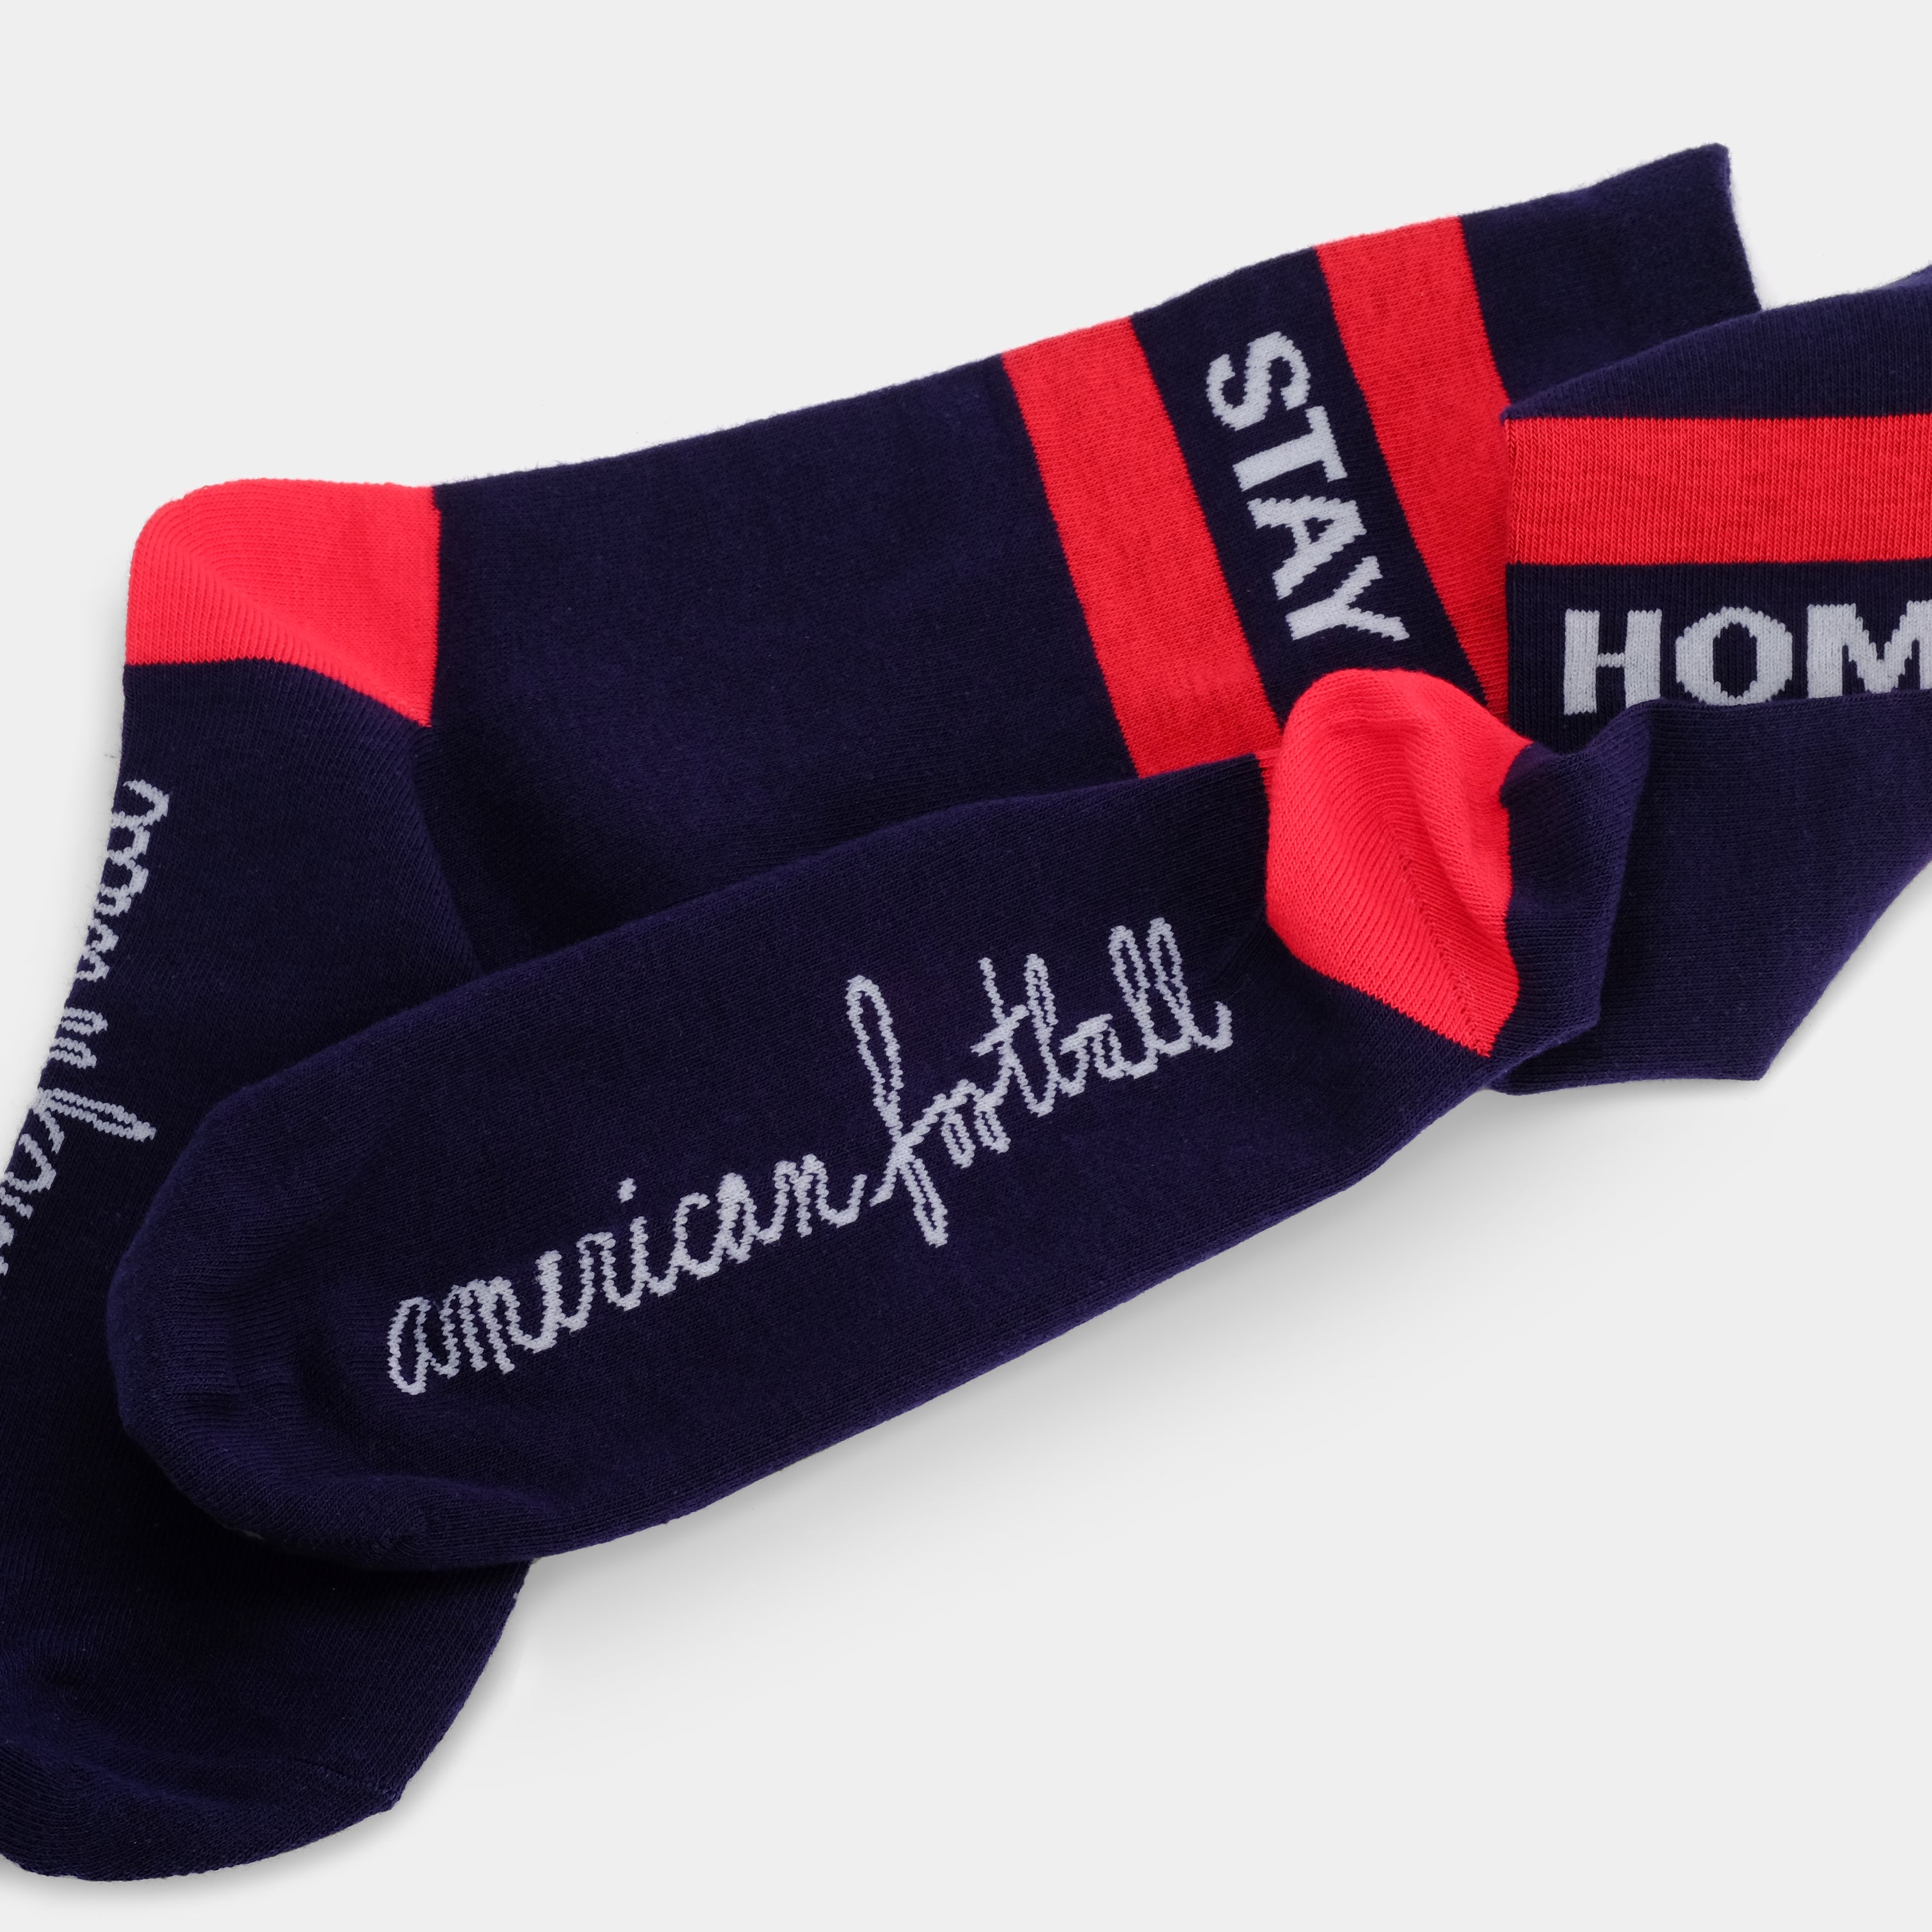 American Football "Stay Home" Socks